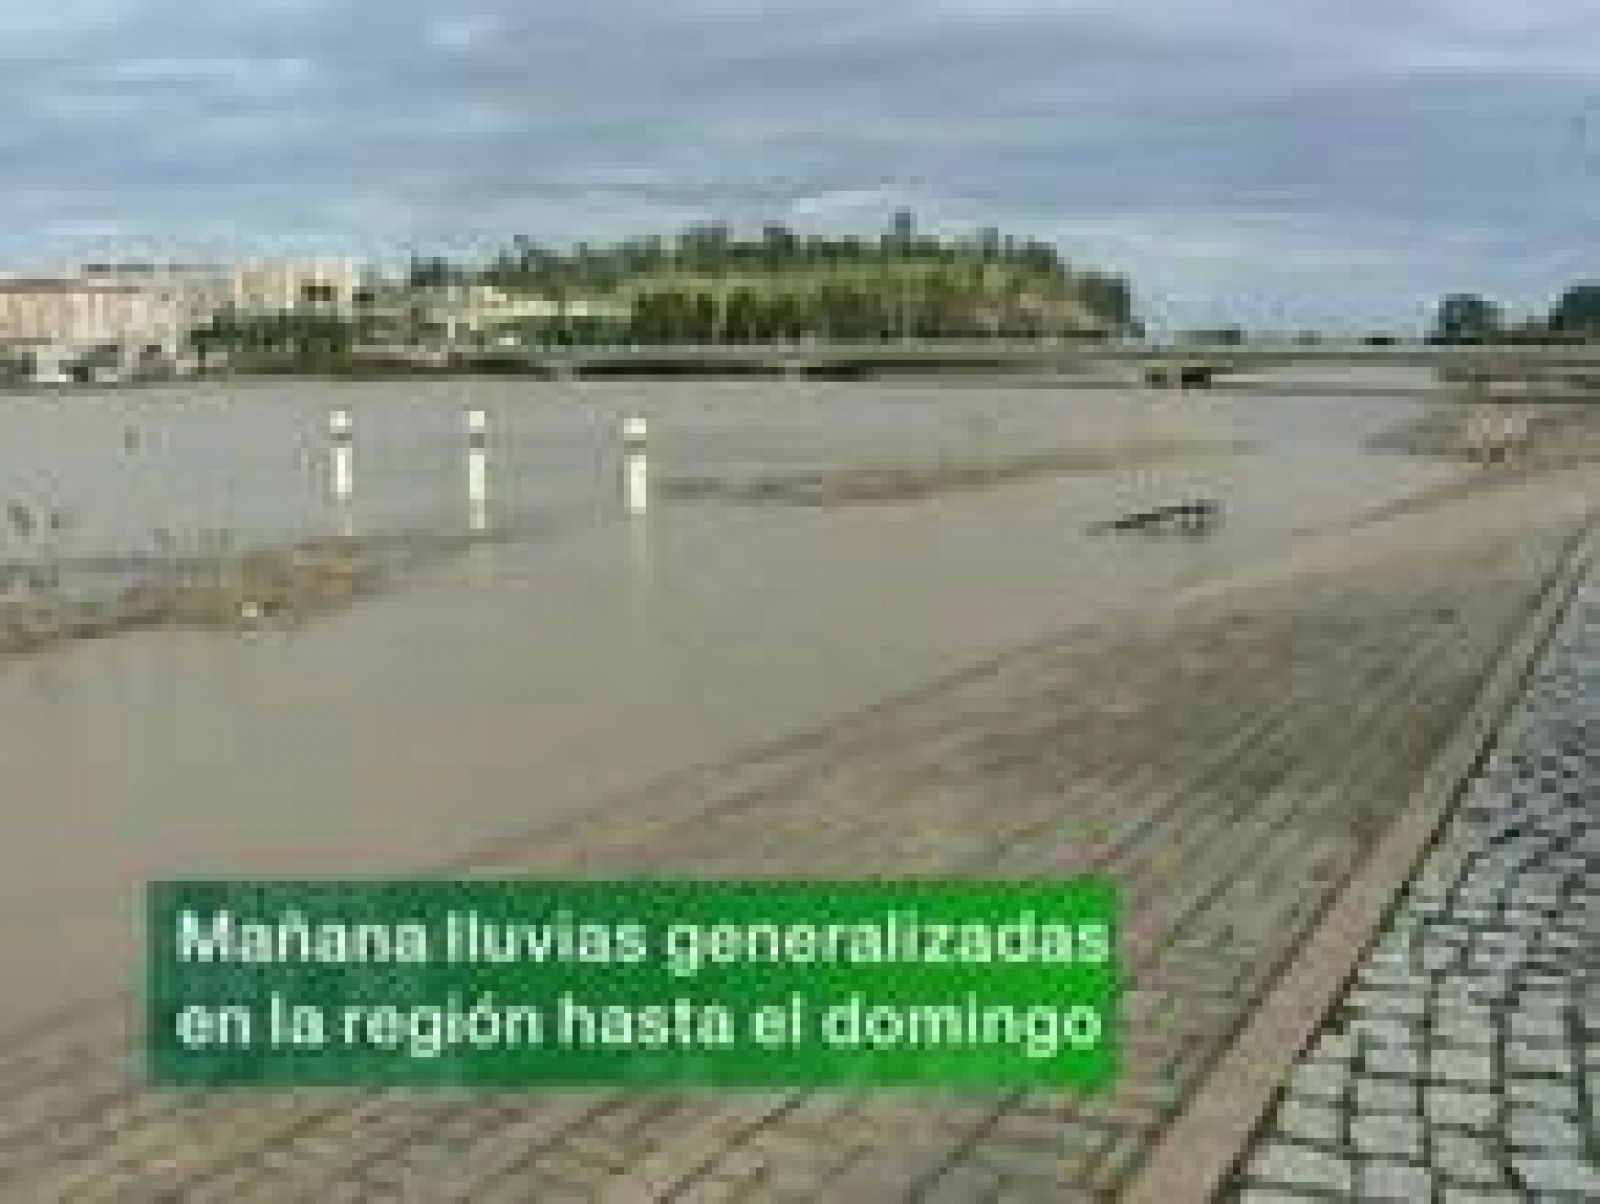 Noticias de Extremadura: Noticias de Extremadura - 01/03/10 | RTVE Play